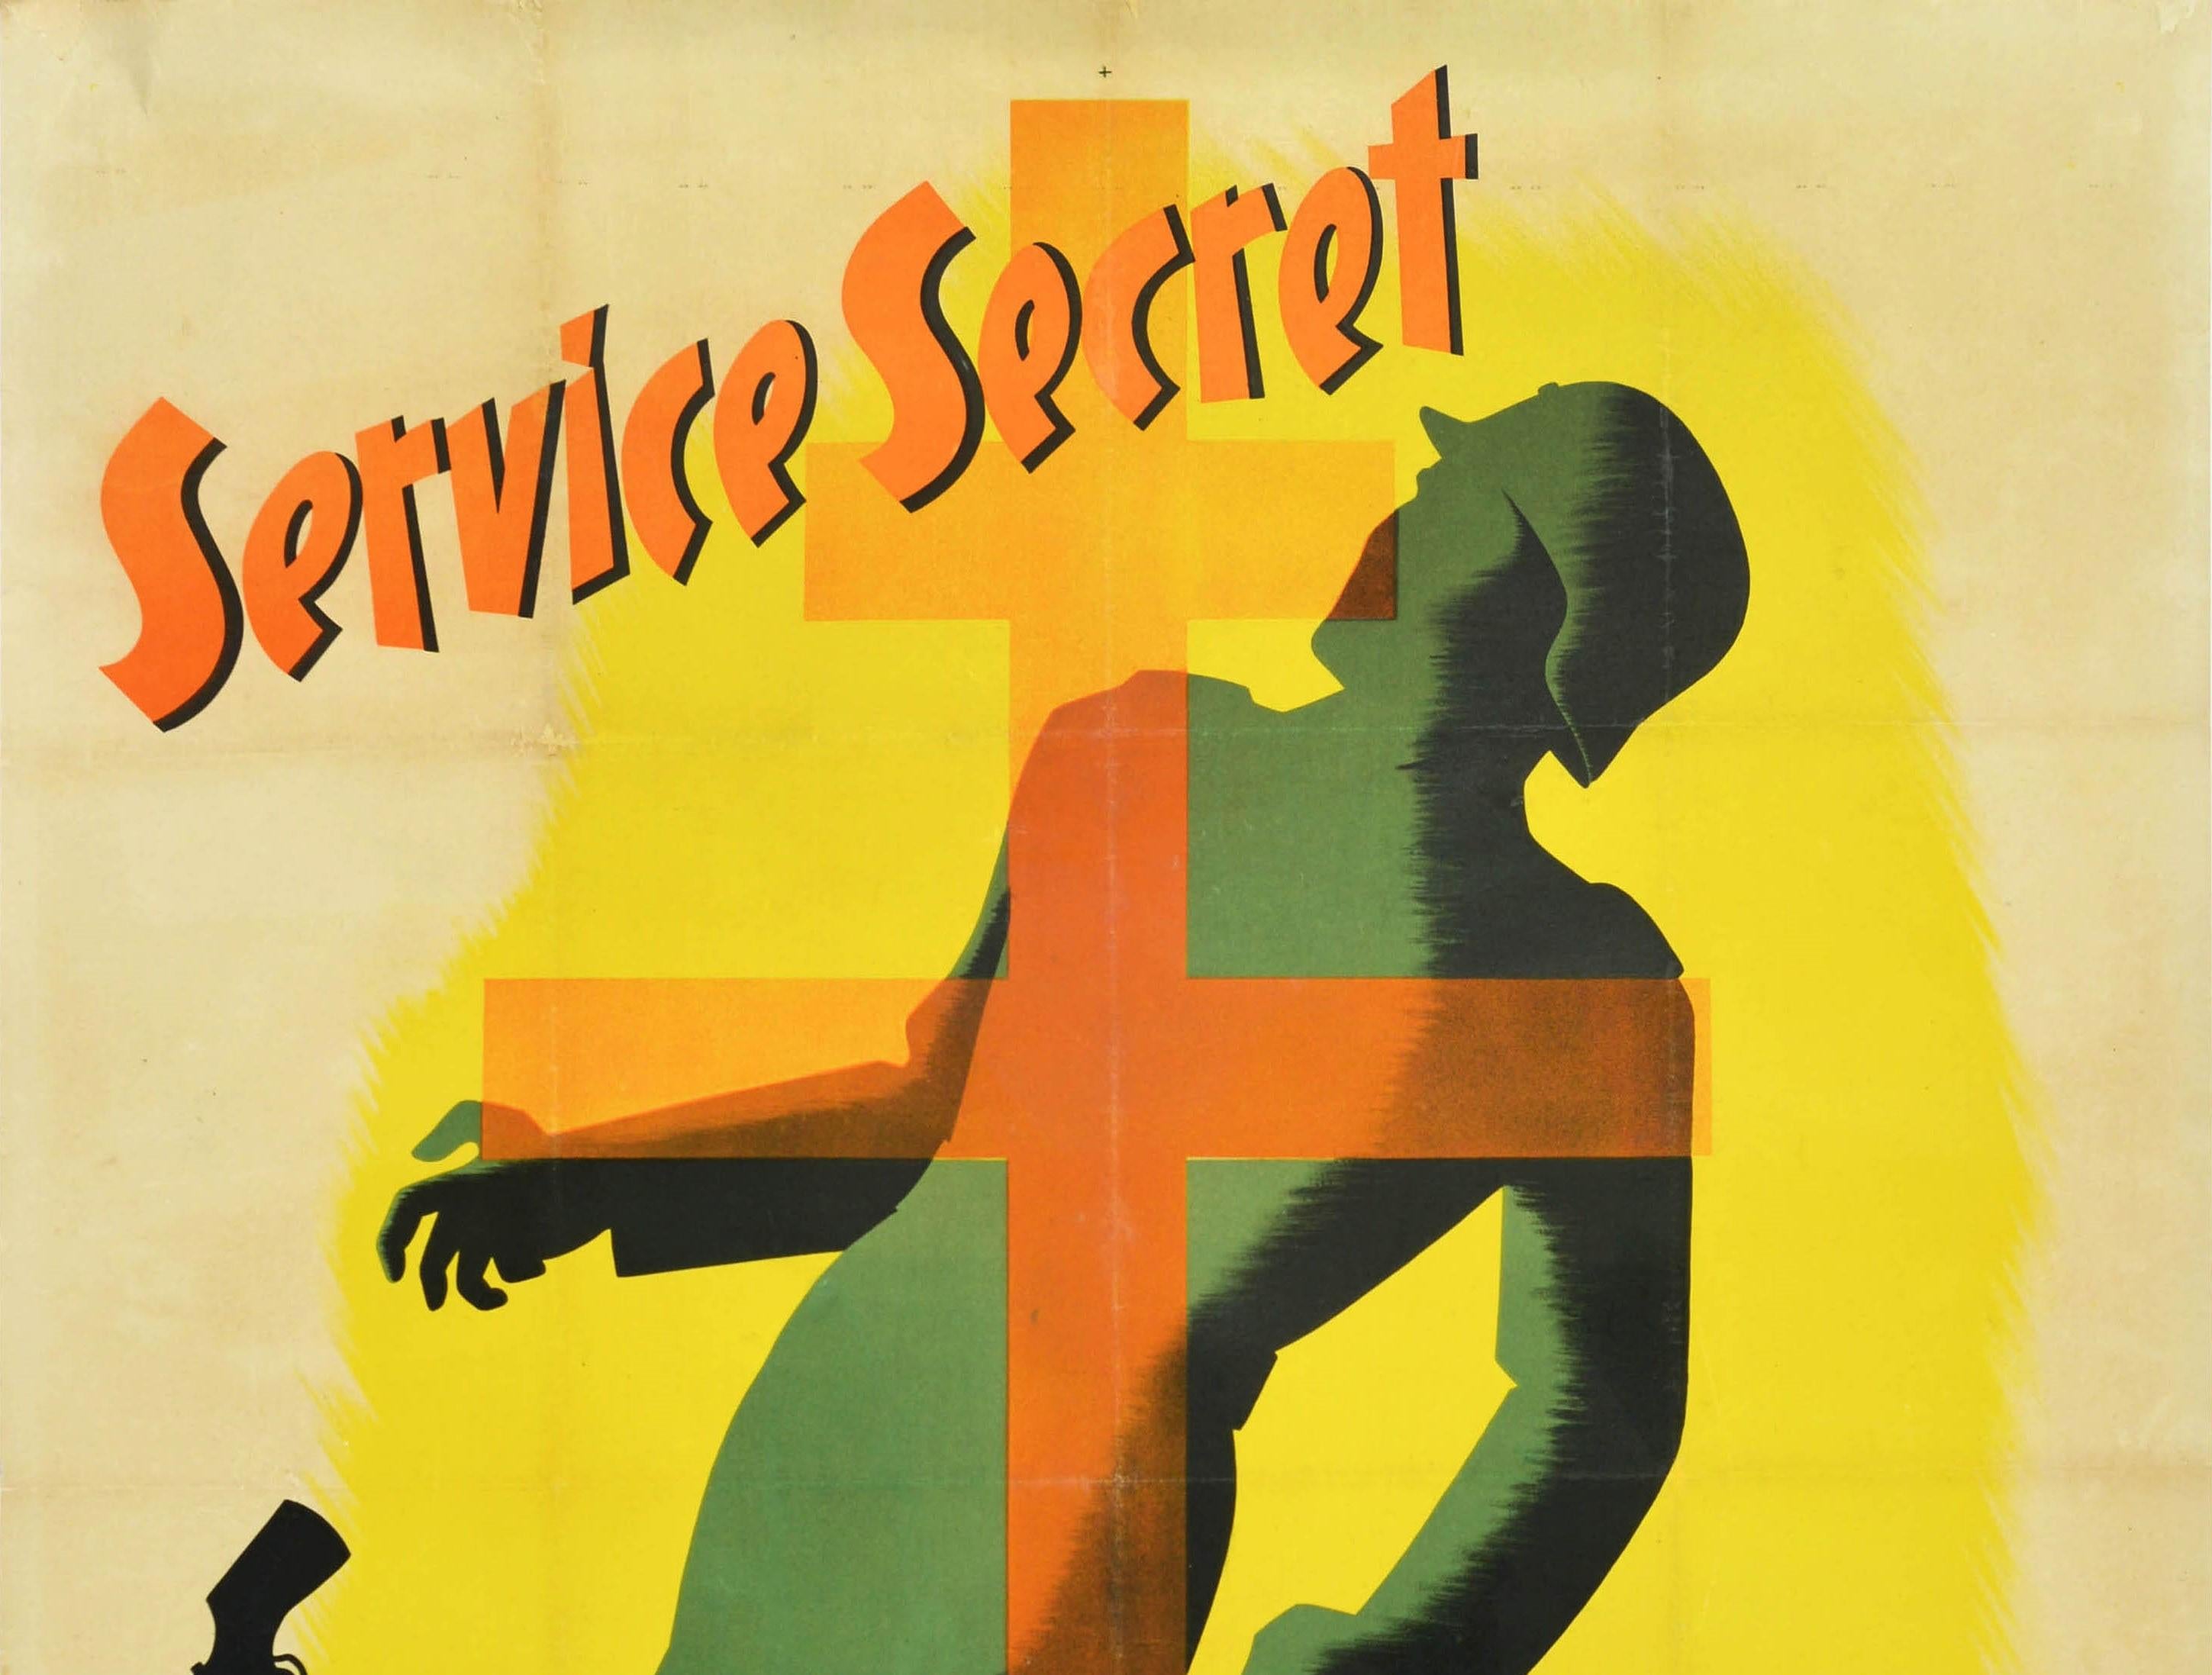 Original Vintage WWII Film Poster Service Secret Mission Spy War Drama Movie Art - Print by Unknown